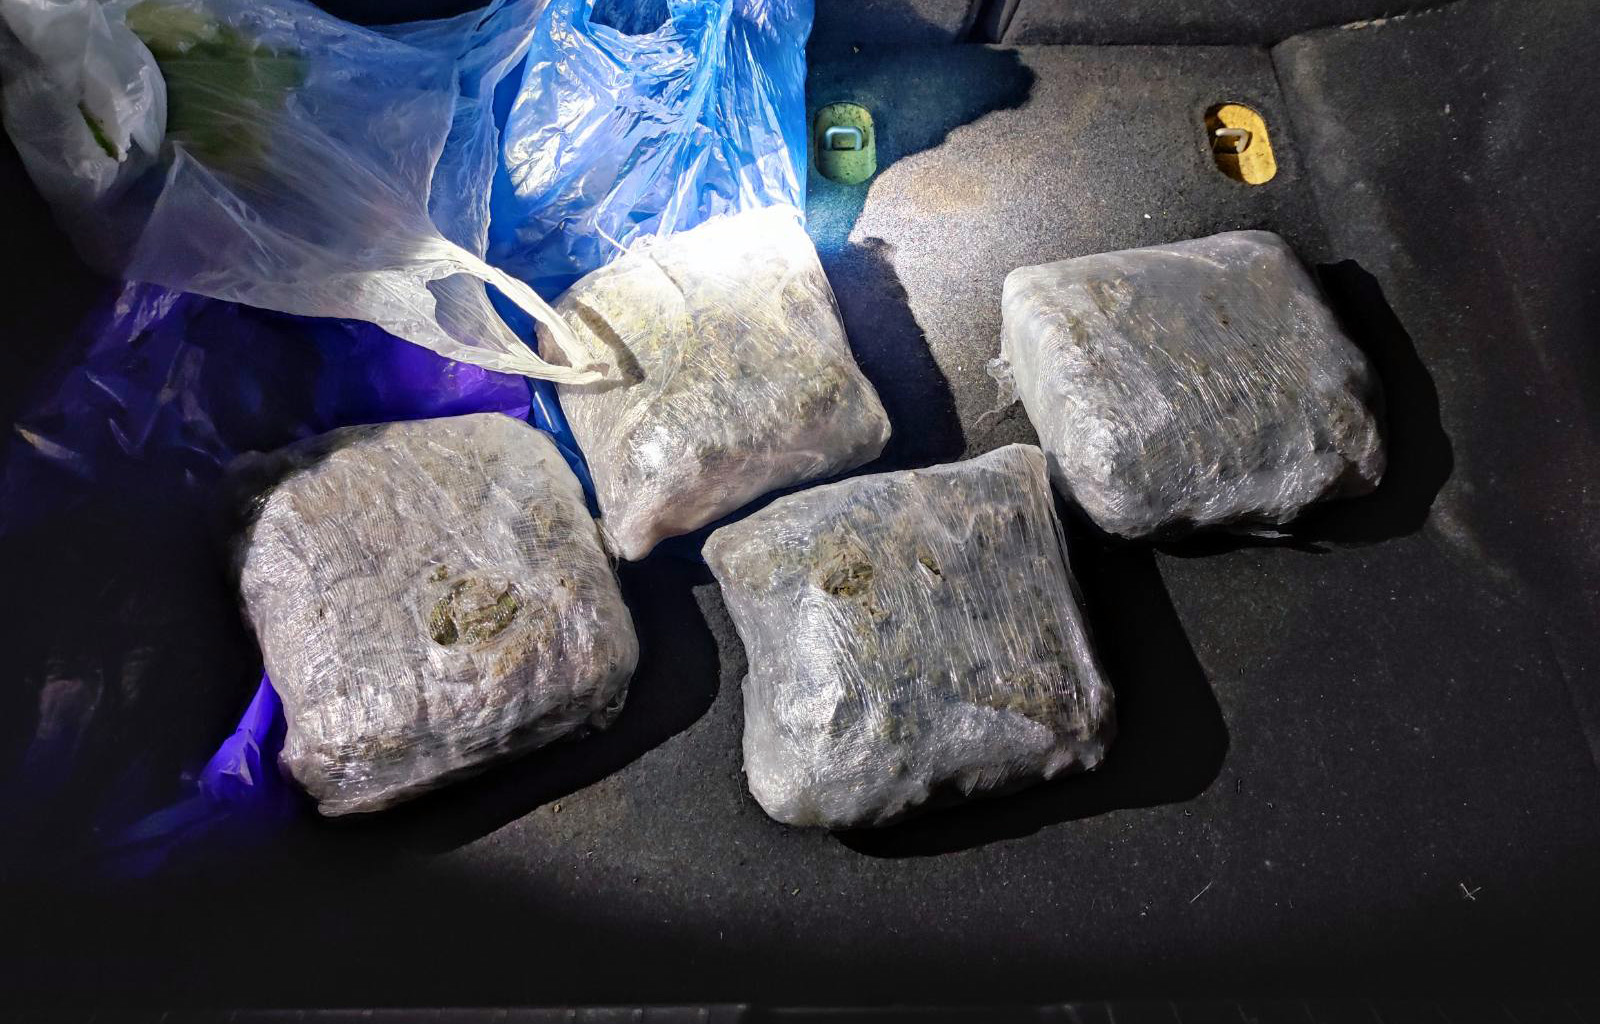 Policija Paraćincu pronašla 2 kilograma marihuane u gepeku automobila